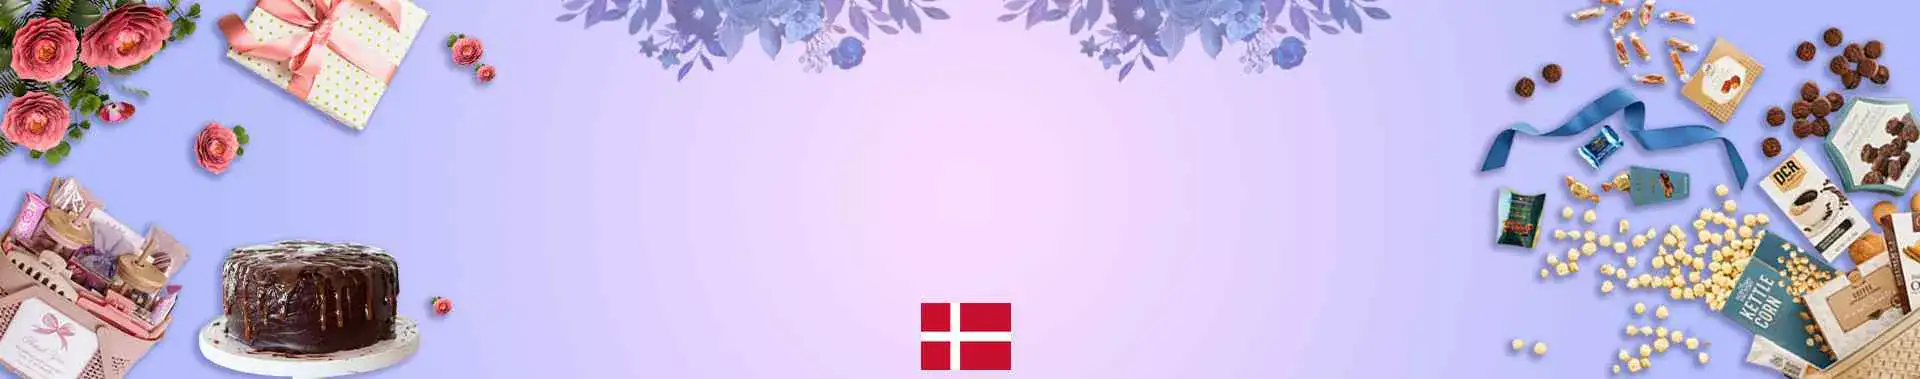 Send Gifts to Denmark, Gift Baskets to Denmark, Hampers to Denmark, Hampers & Gifts delivery in Denmark Online